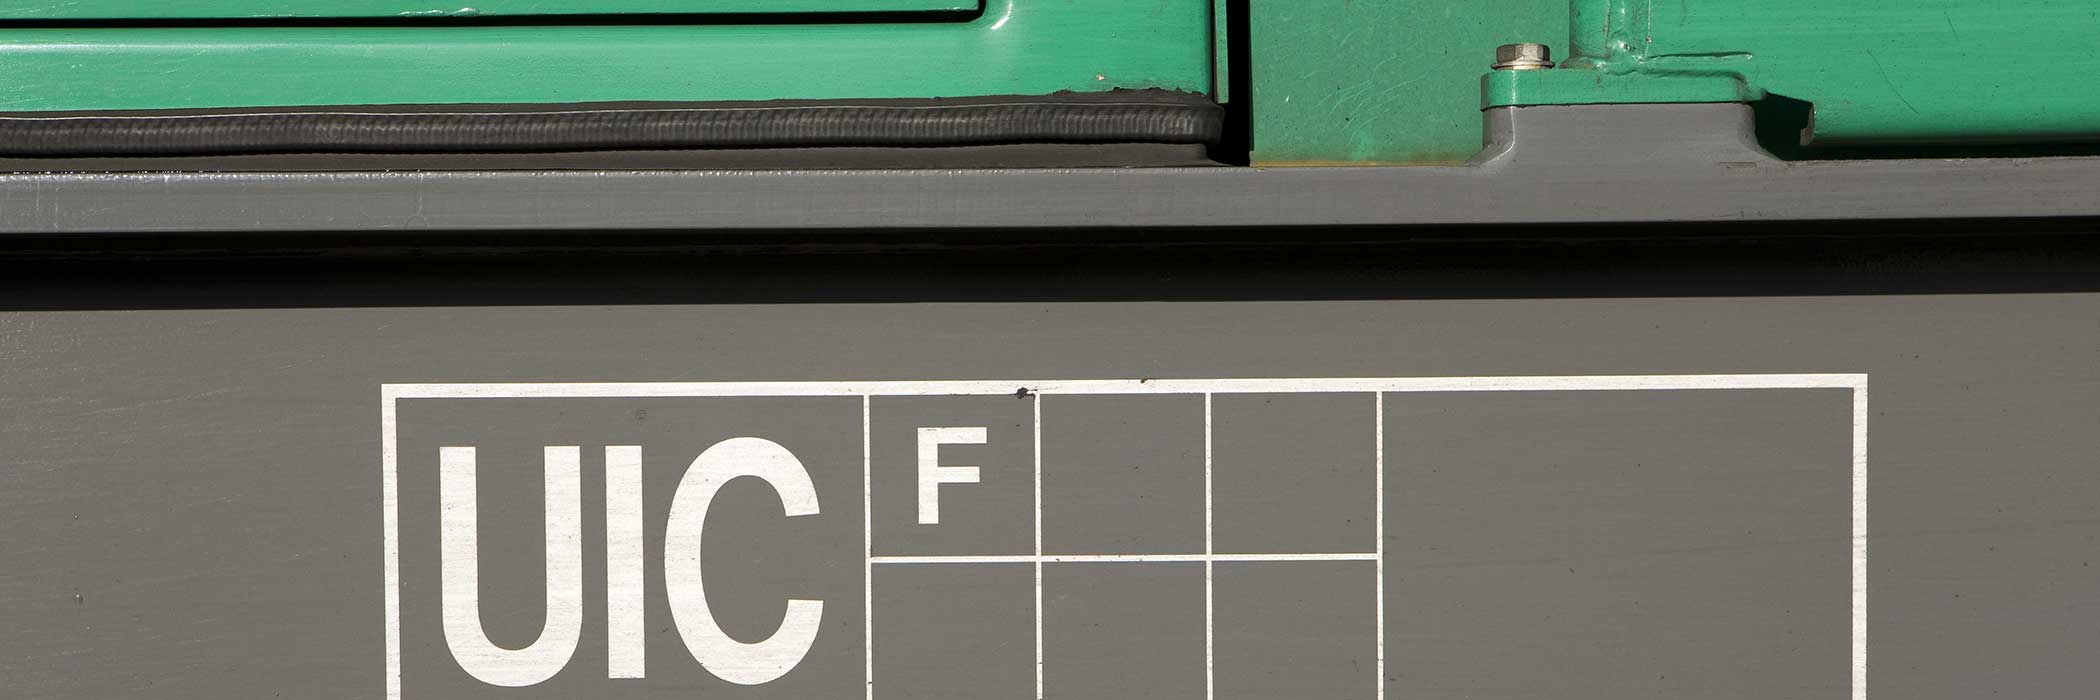 UIC marking on a rail vehicle